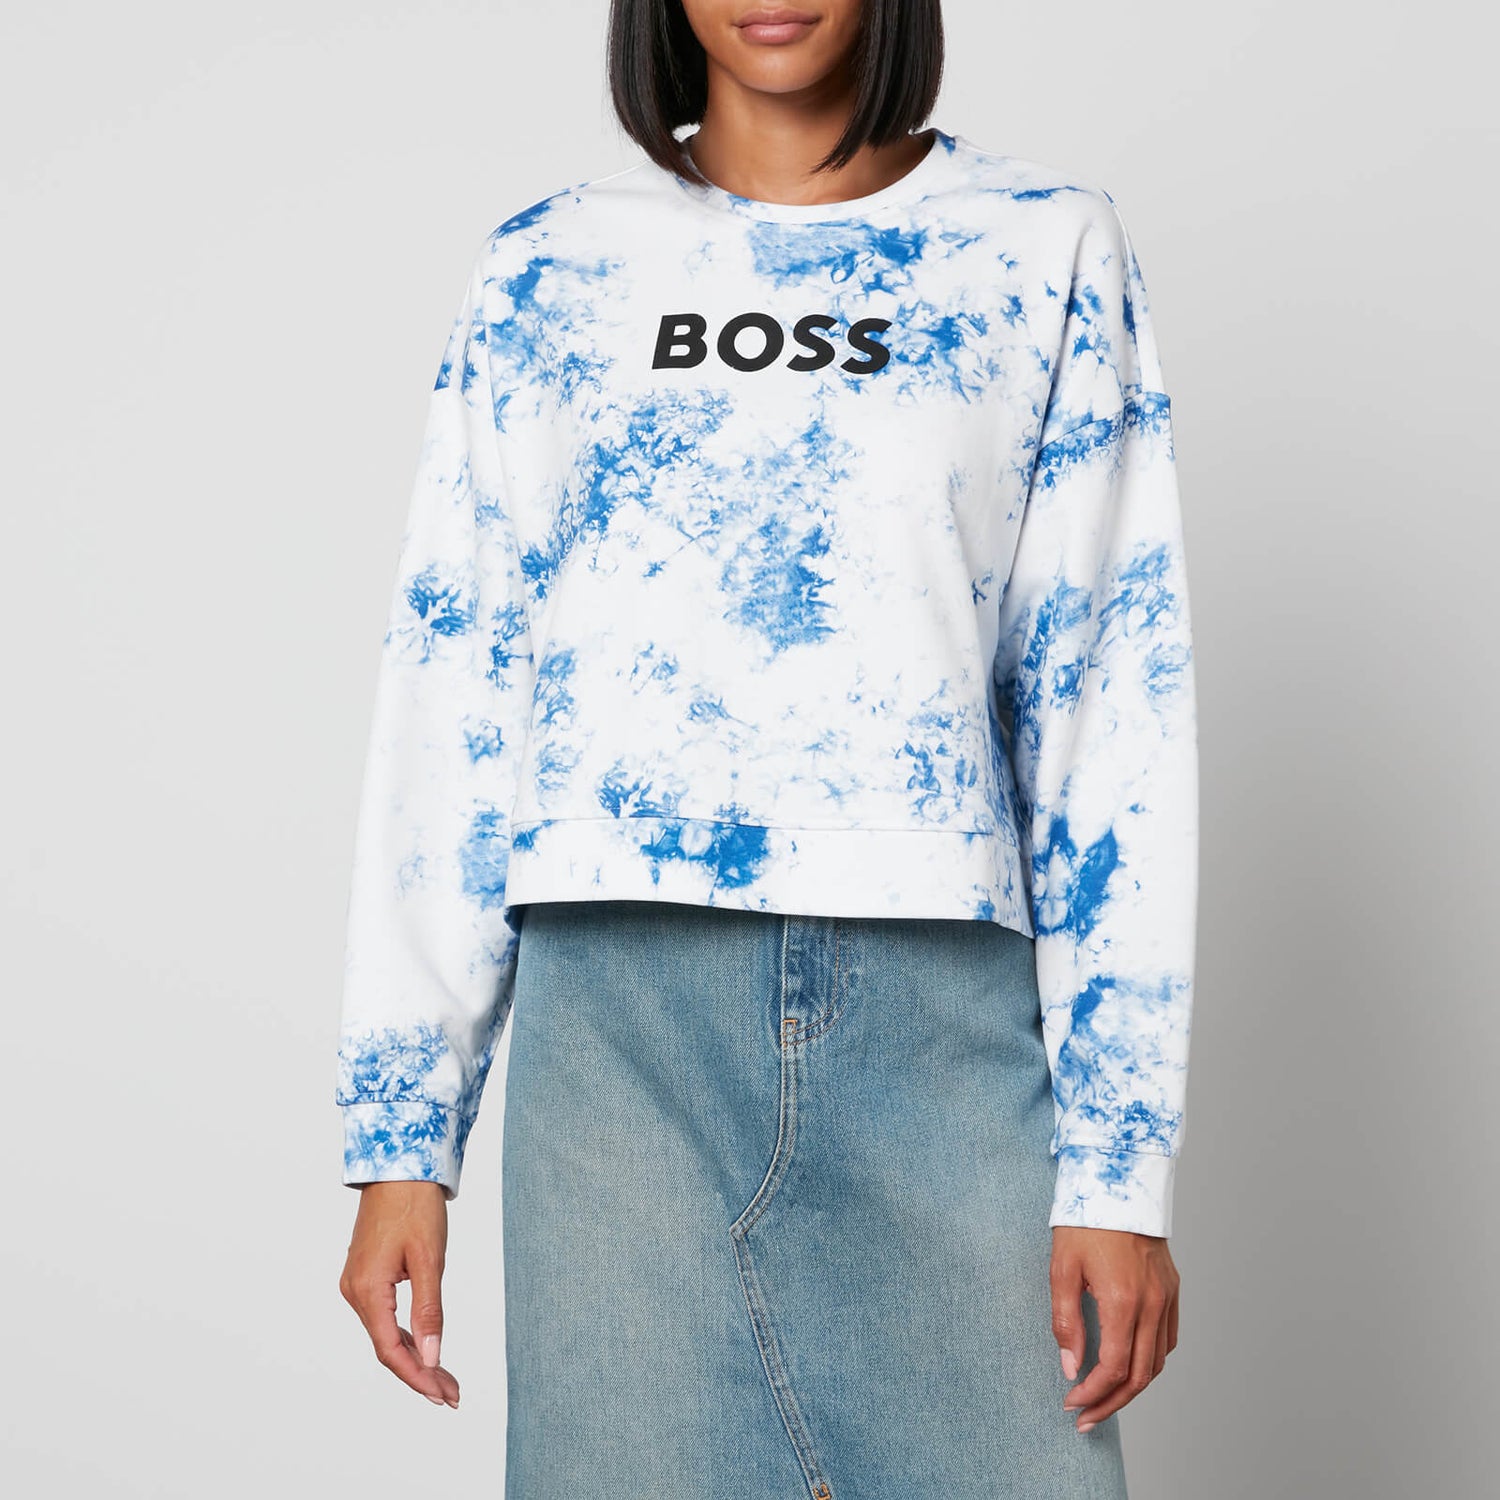 BOSS Women's Ebatika Sweatshirt - Open Miscellaneous - XS